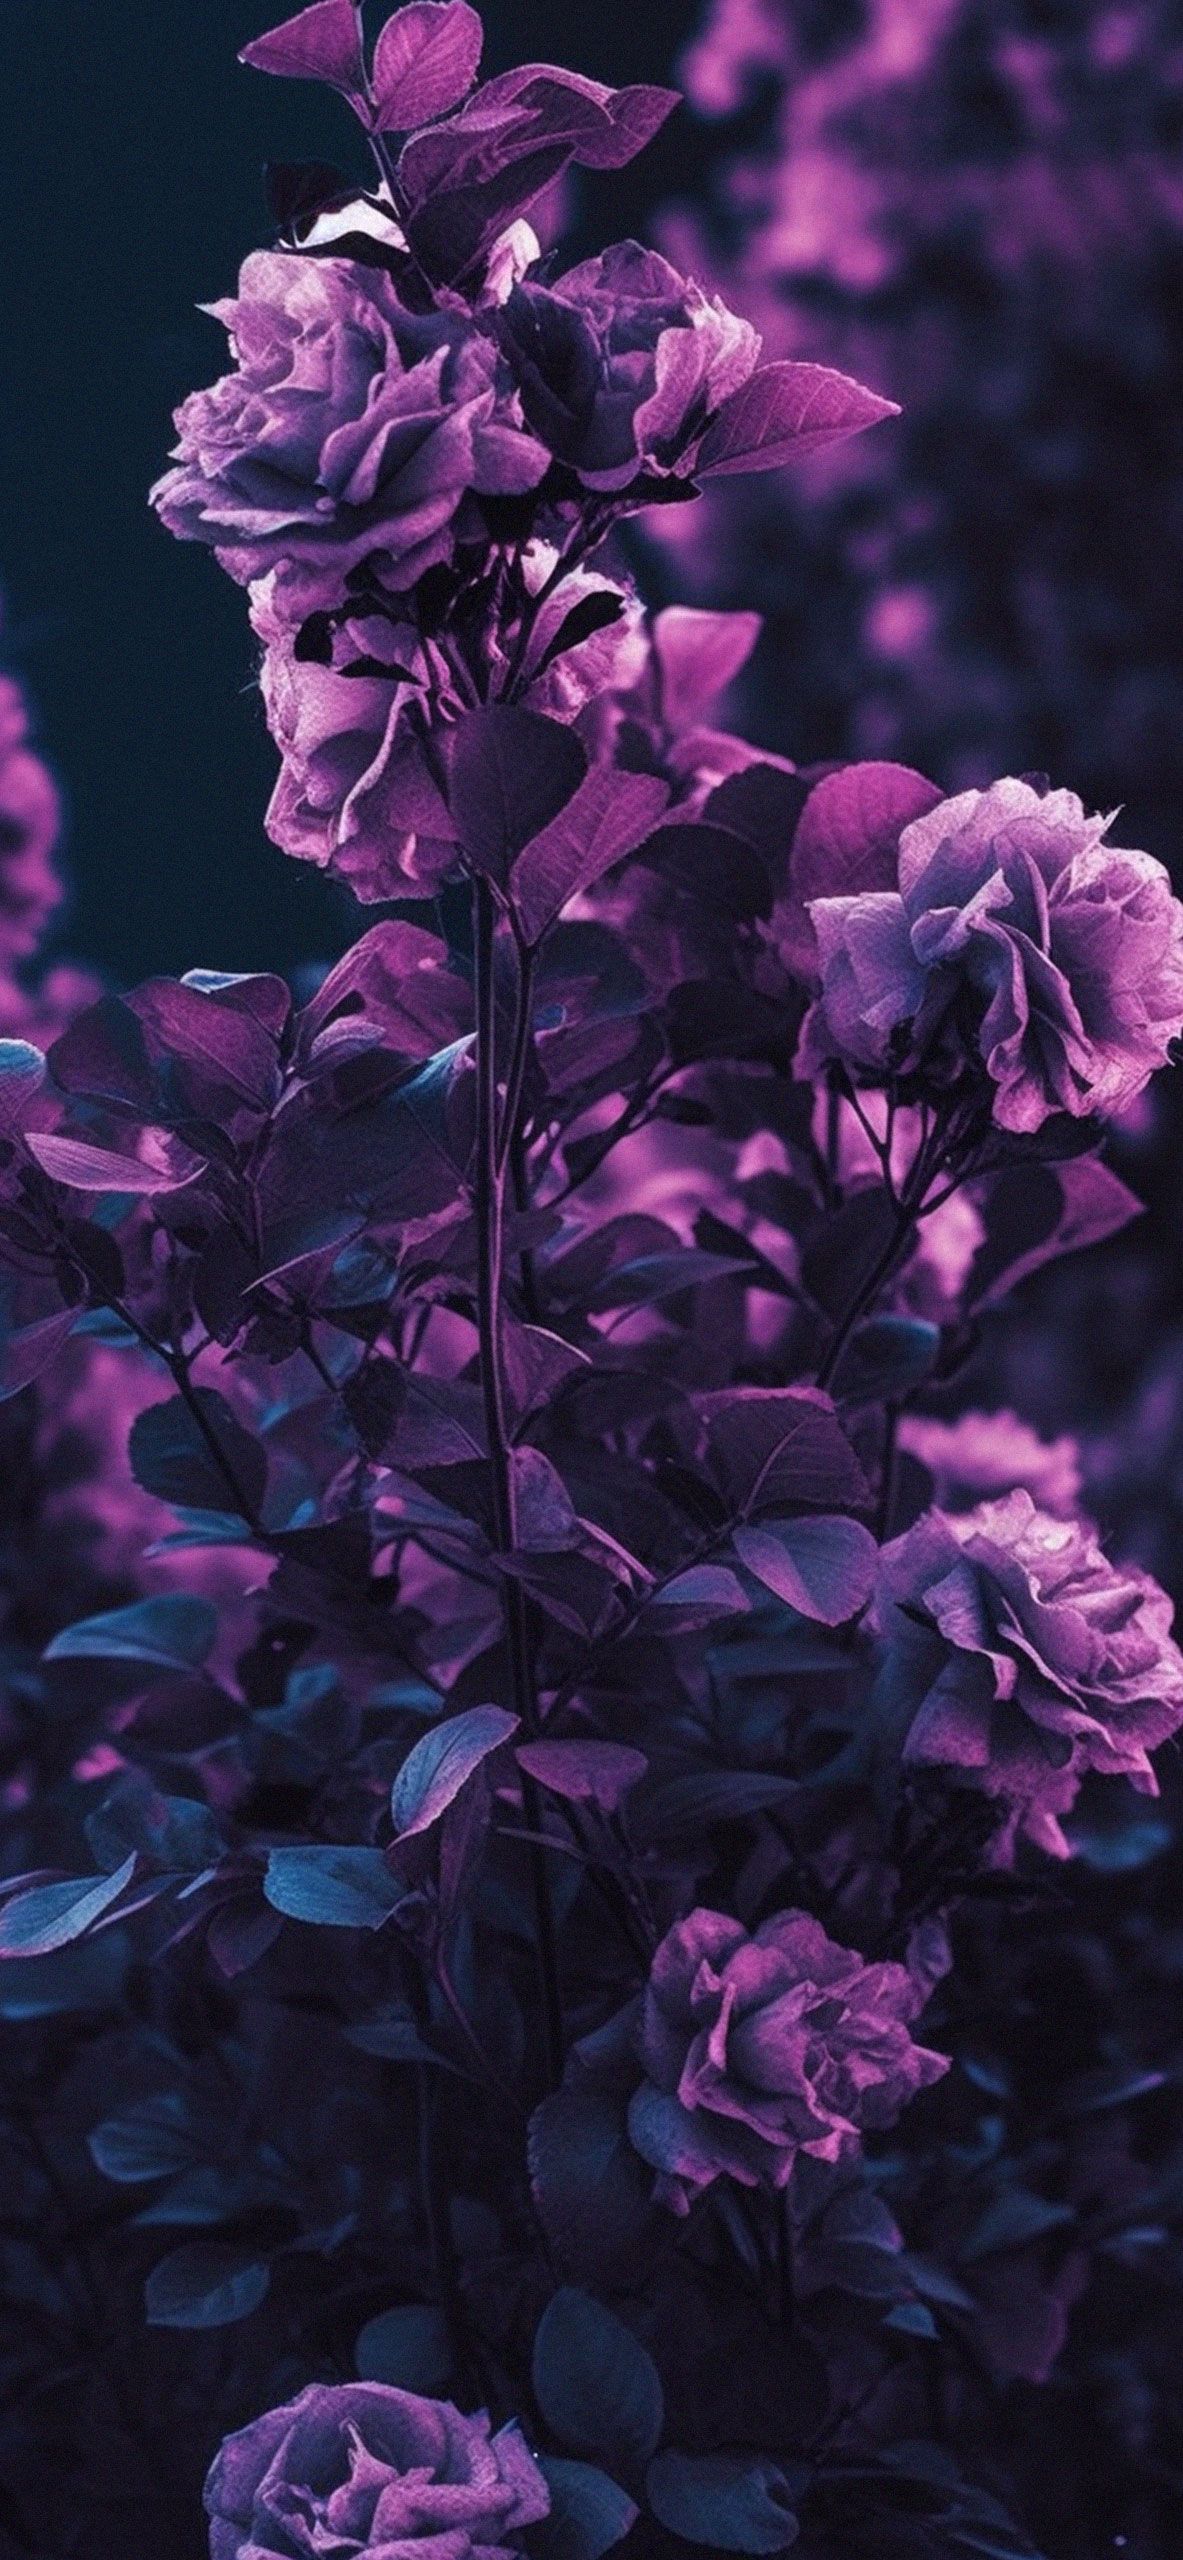 Aesthetic purple flowers wallpaper for iPhone. - Roses, purple, garden